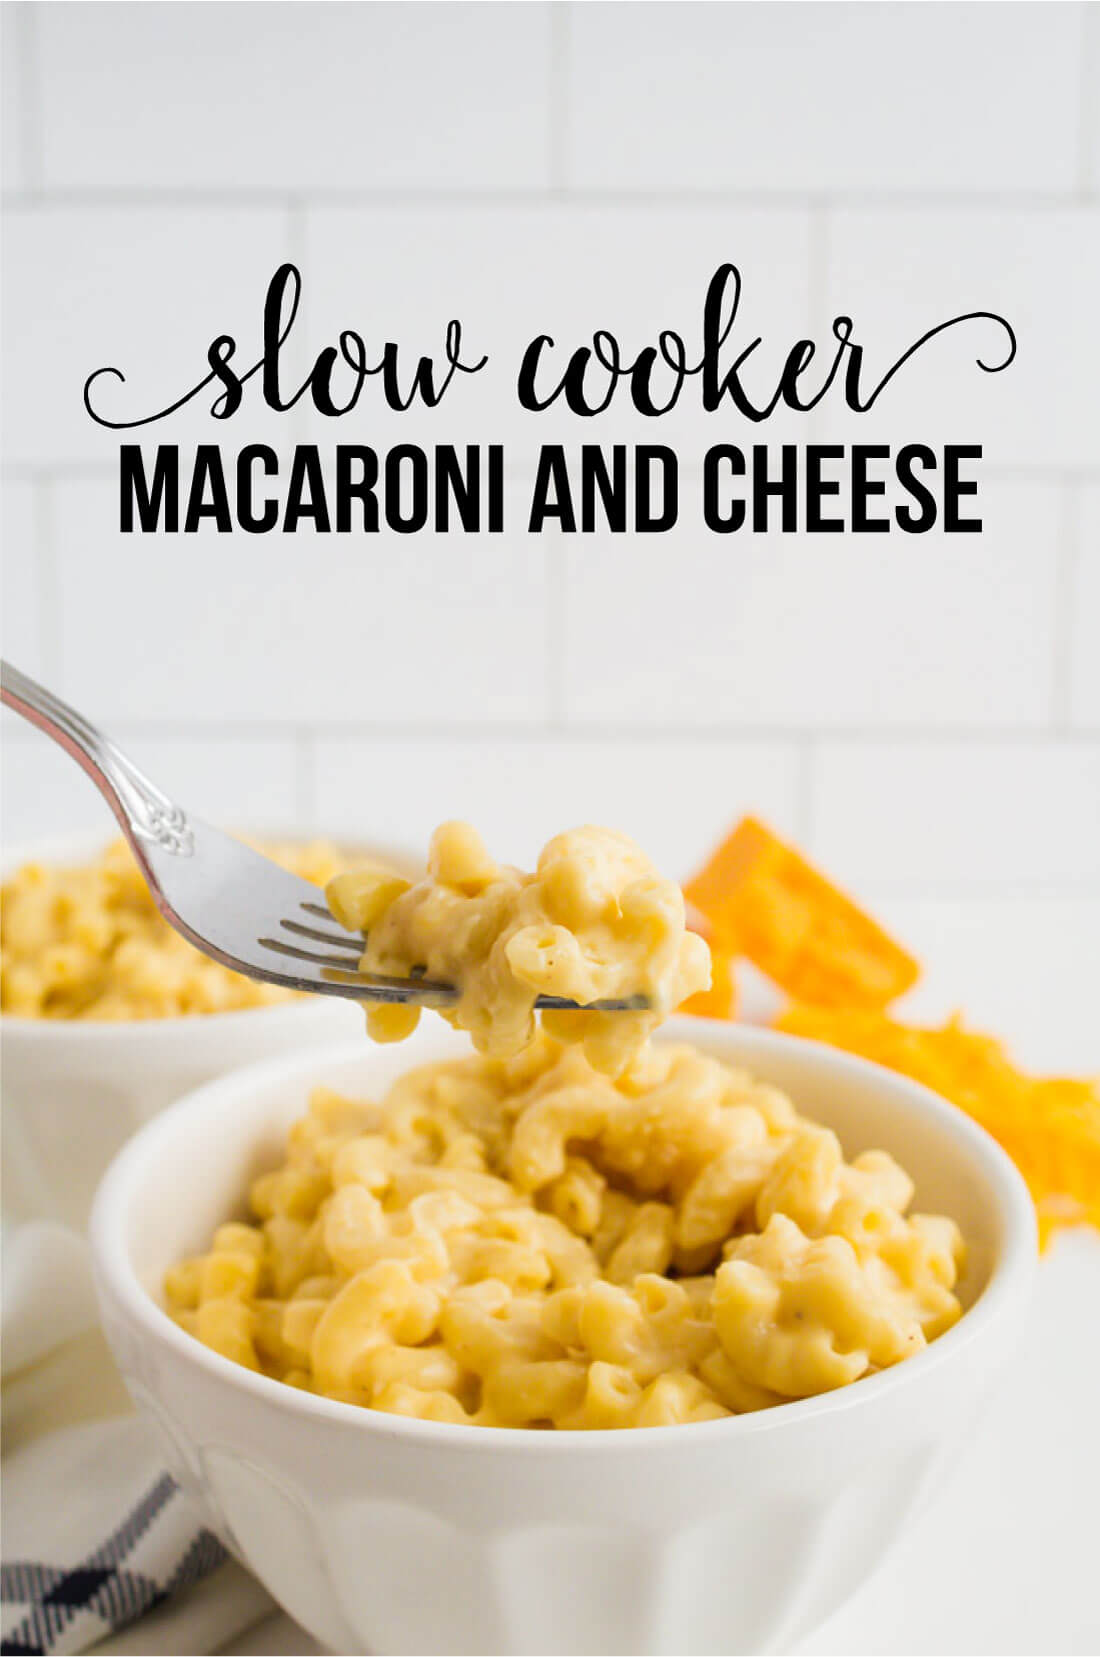 Slow Cooker Macaroni and Cheese Recipe - make this amazing mac and cheese recipe in the crockpot! www.thirtyhandmadedays.com